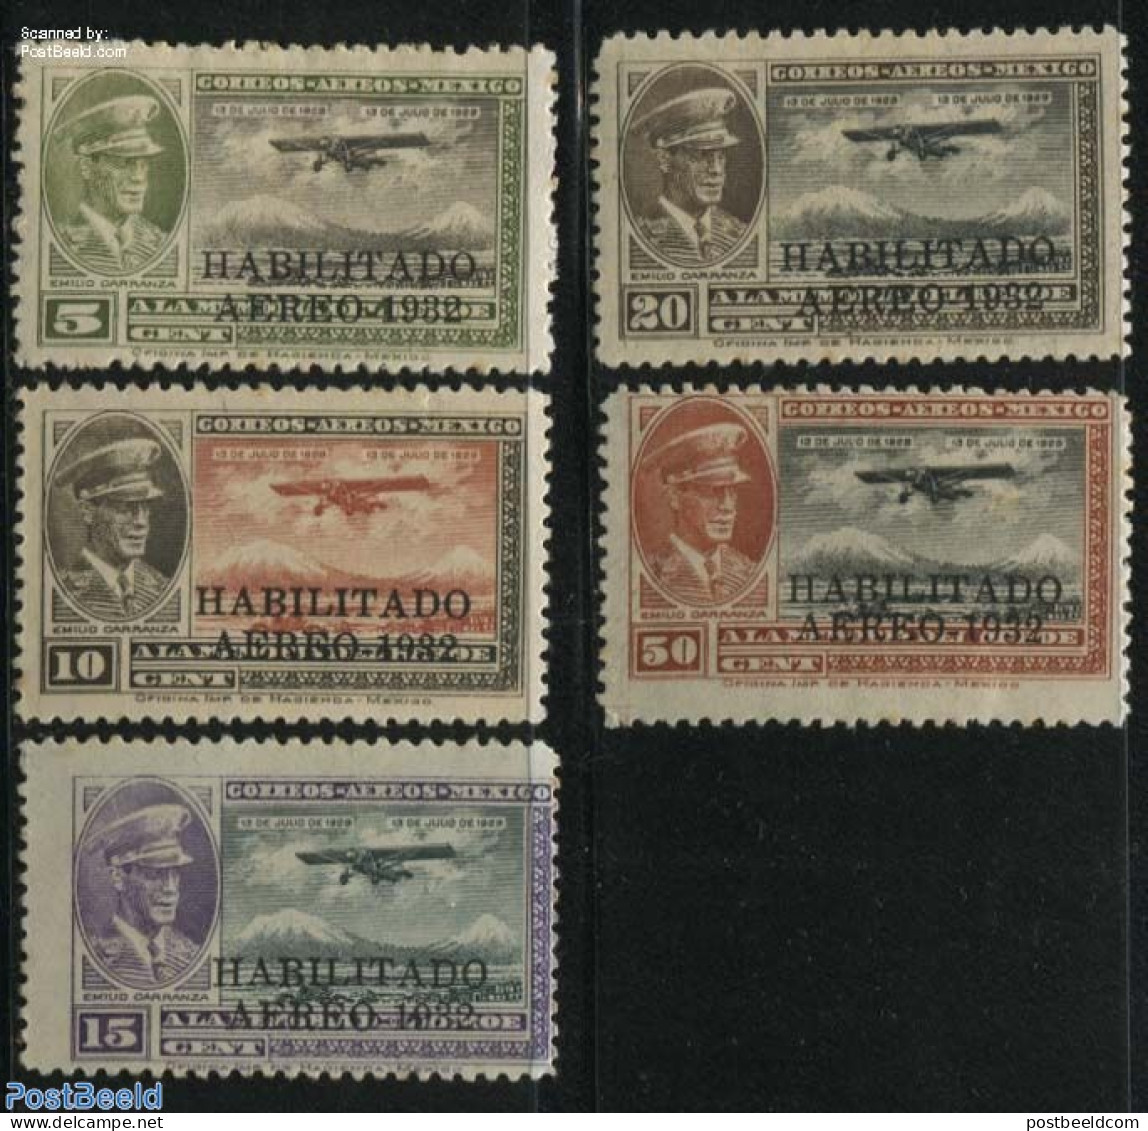 Mexico 1932 Airmail Overprints 5v, Unused (hinged), Transport - Aircraft & Aviation - Aviones